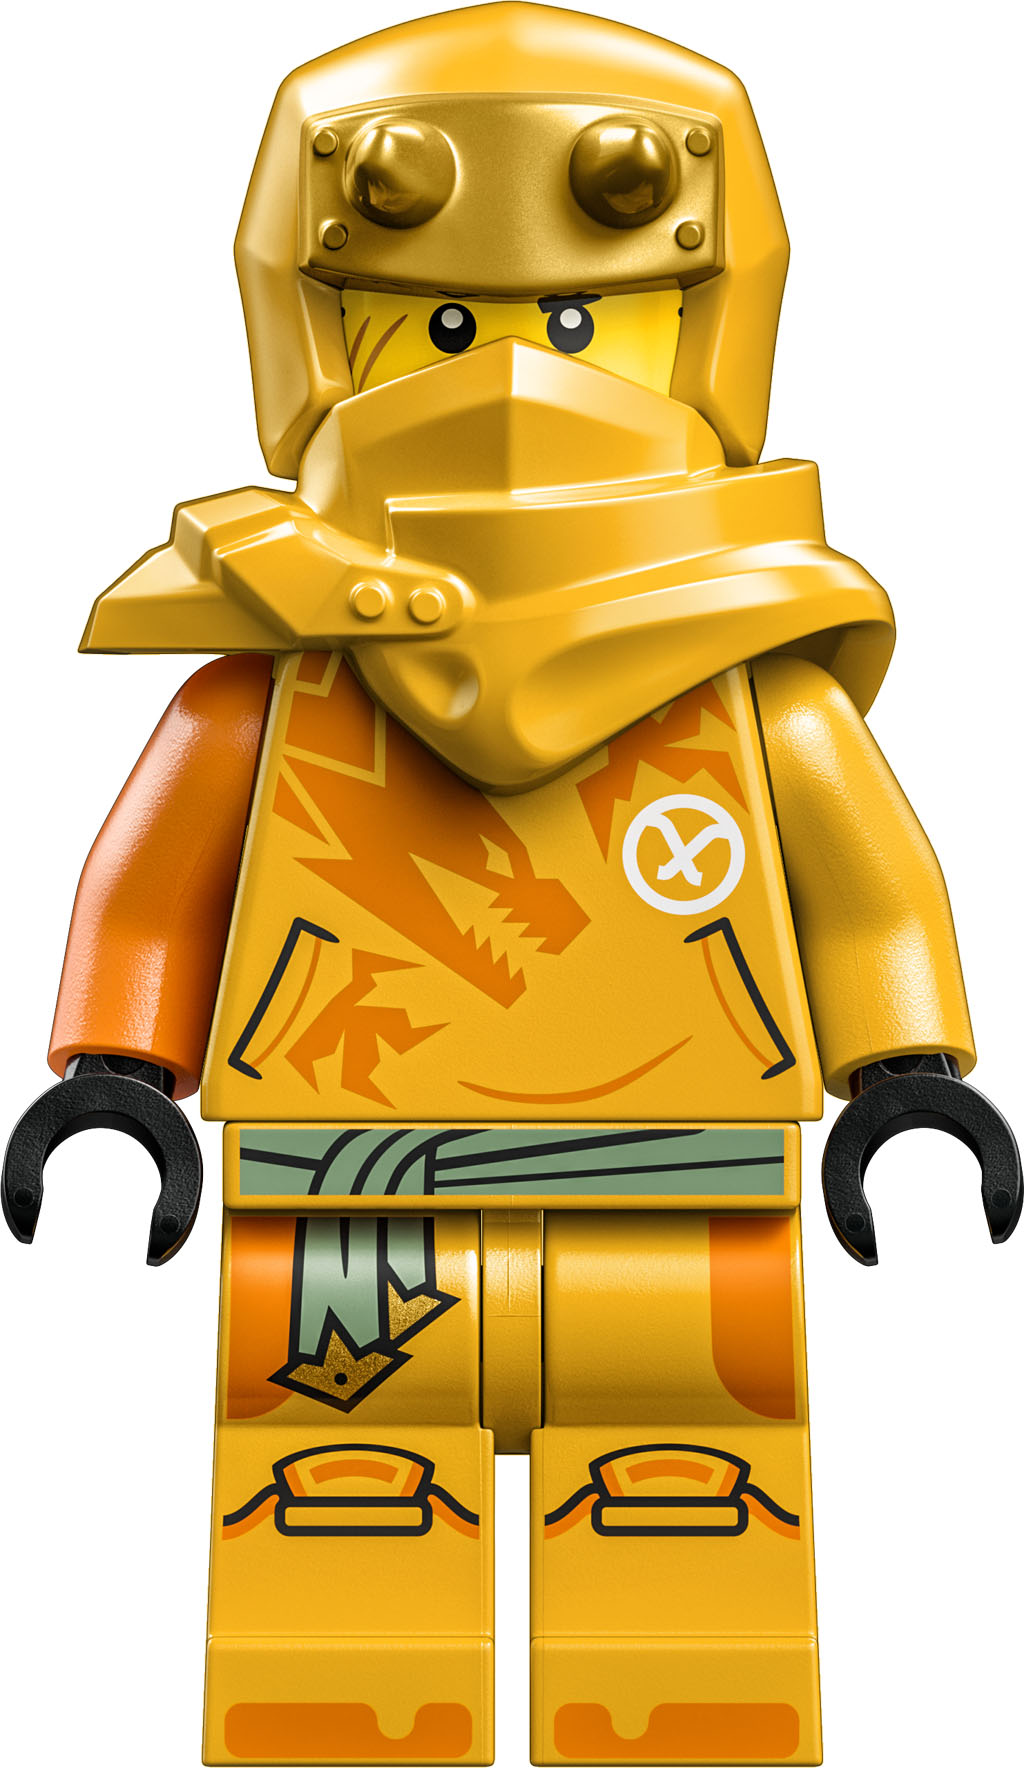 Lego NINJAGO Dragons Rising Lloyd and Arin's Ninja Team Mechs Set